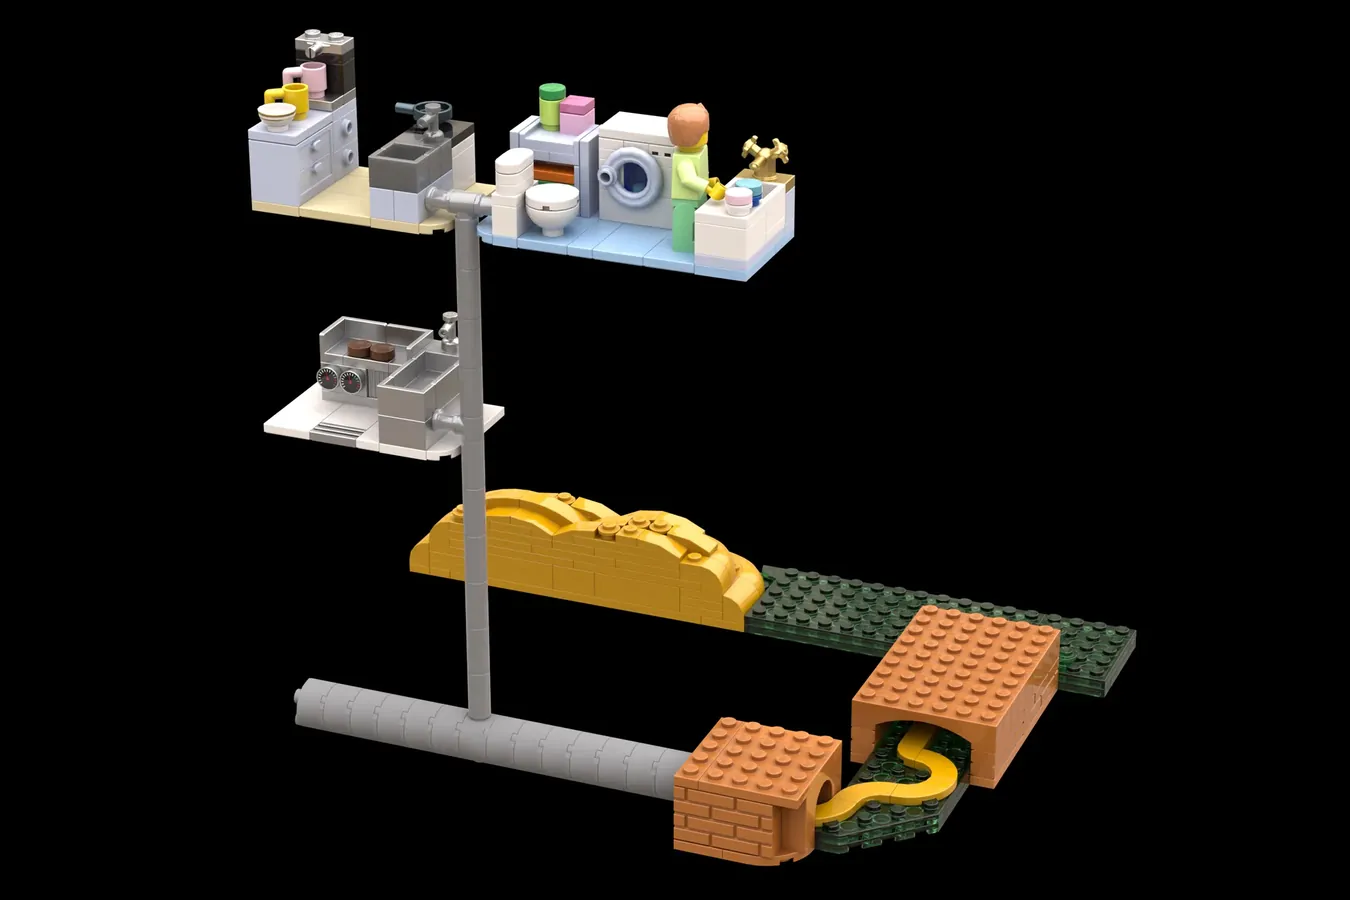 Lego (R) ideas for 